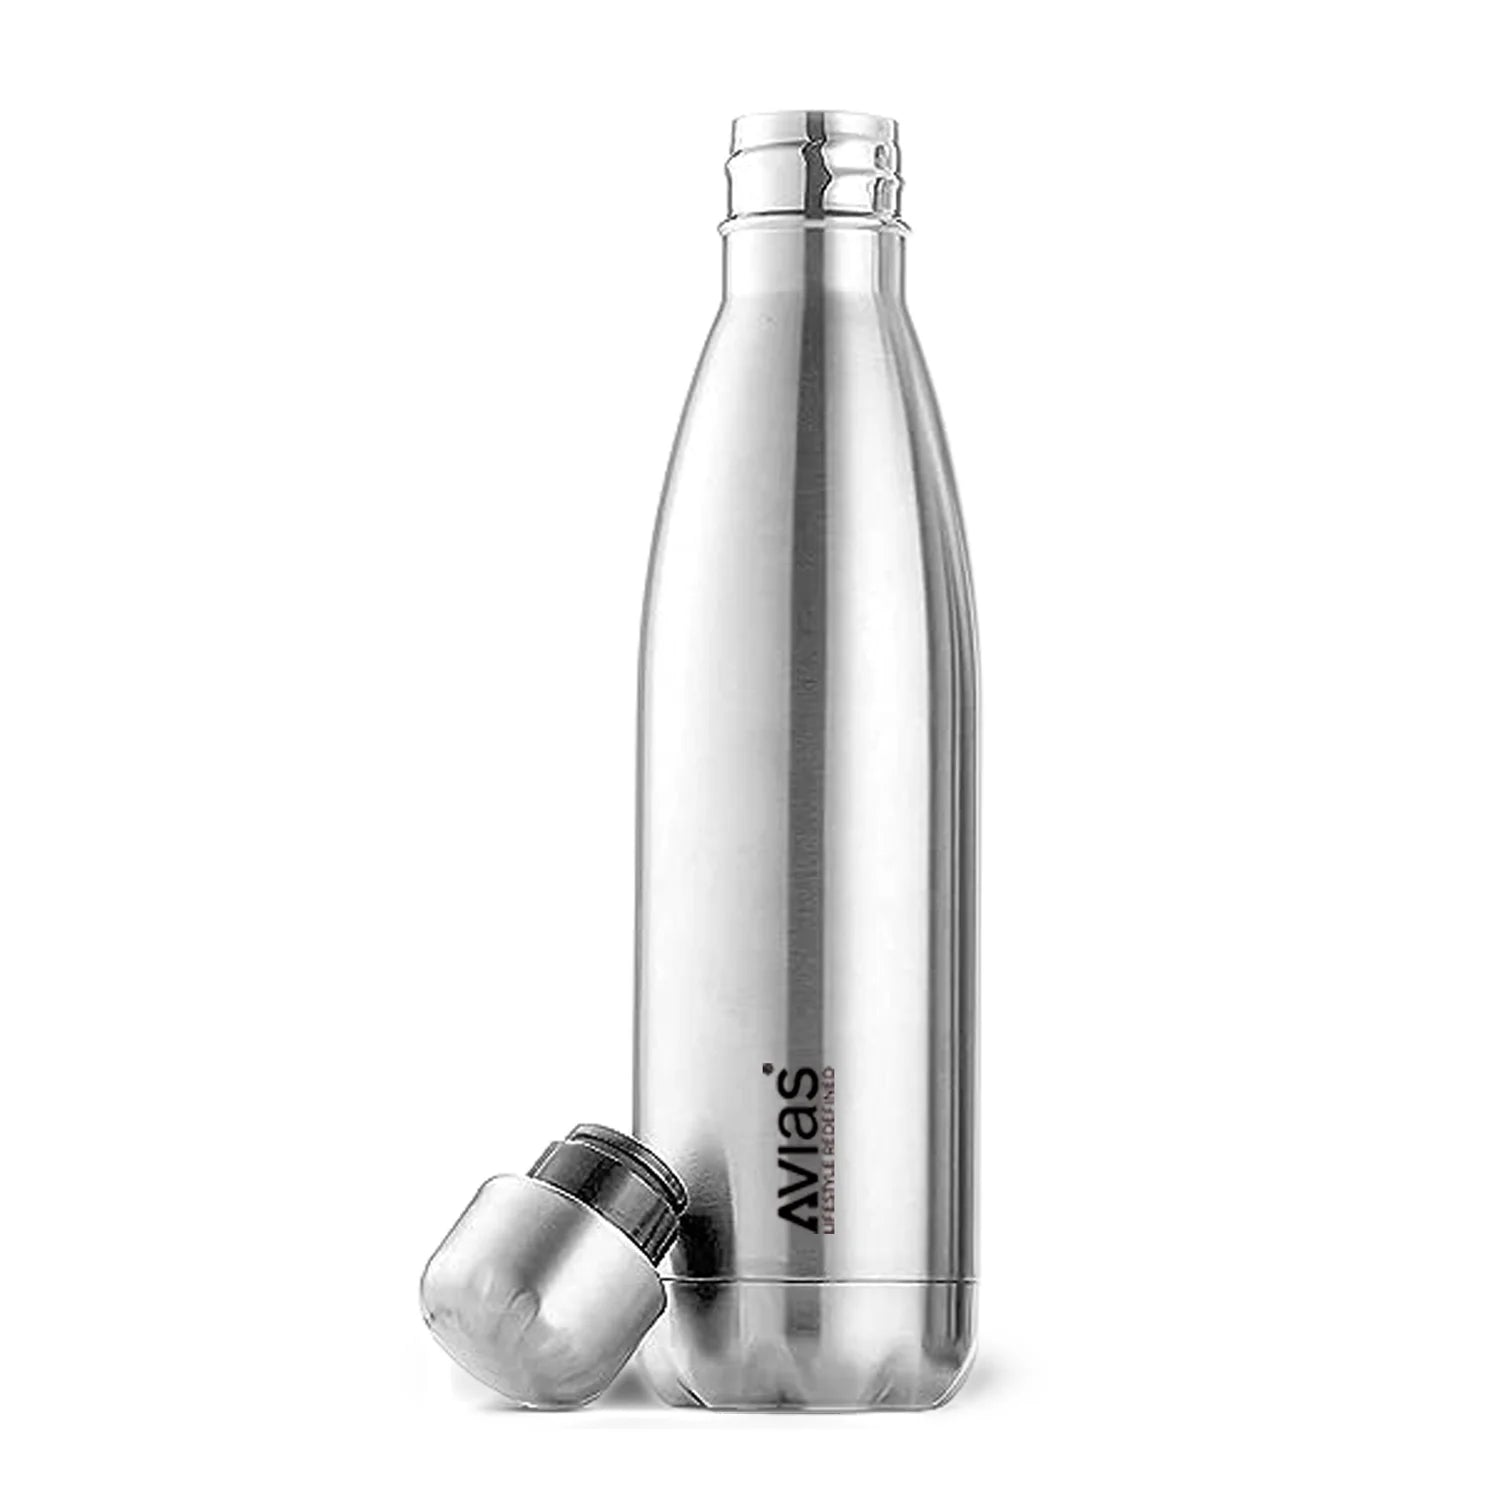 Evita premium stainless steel Vacuum Insulated Flask Water Bottle - grey